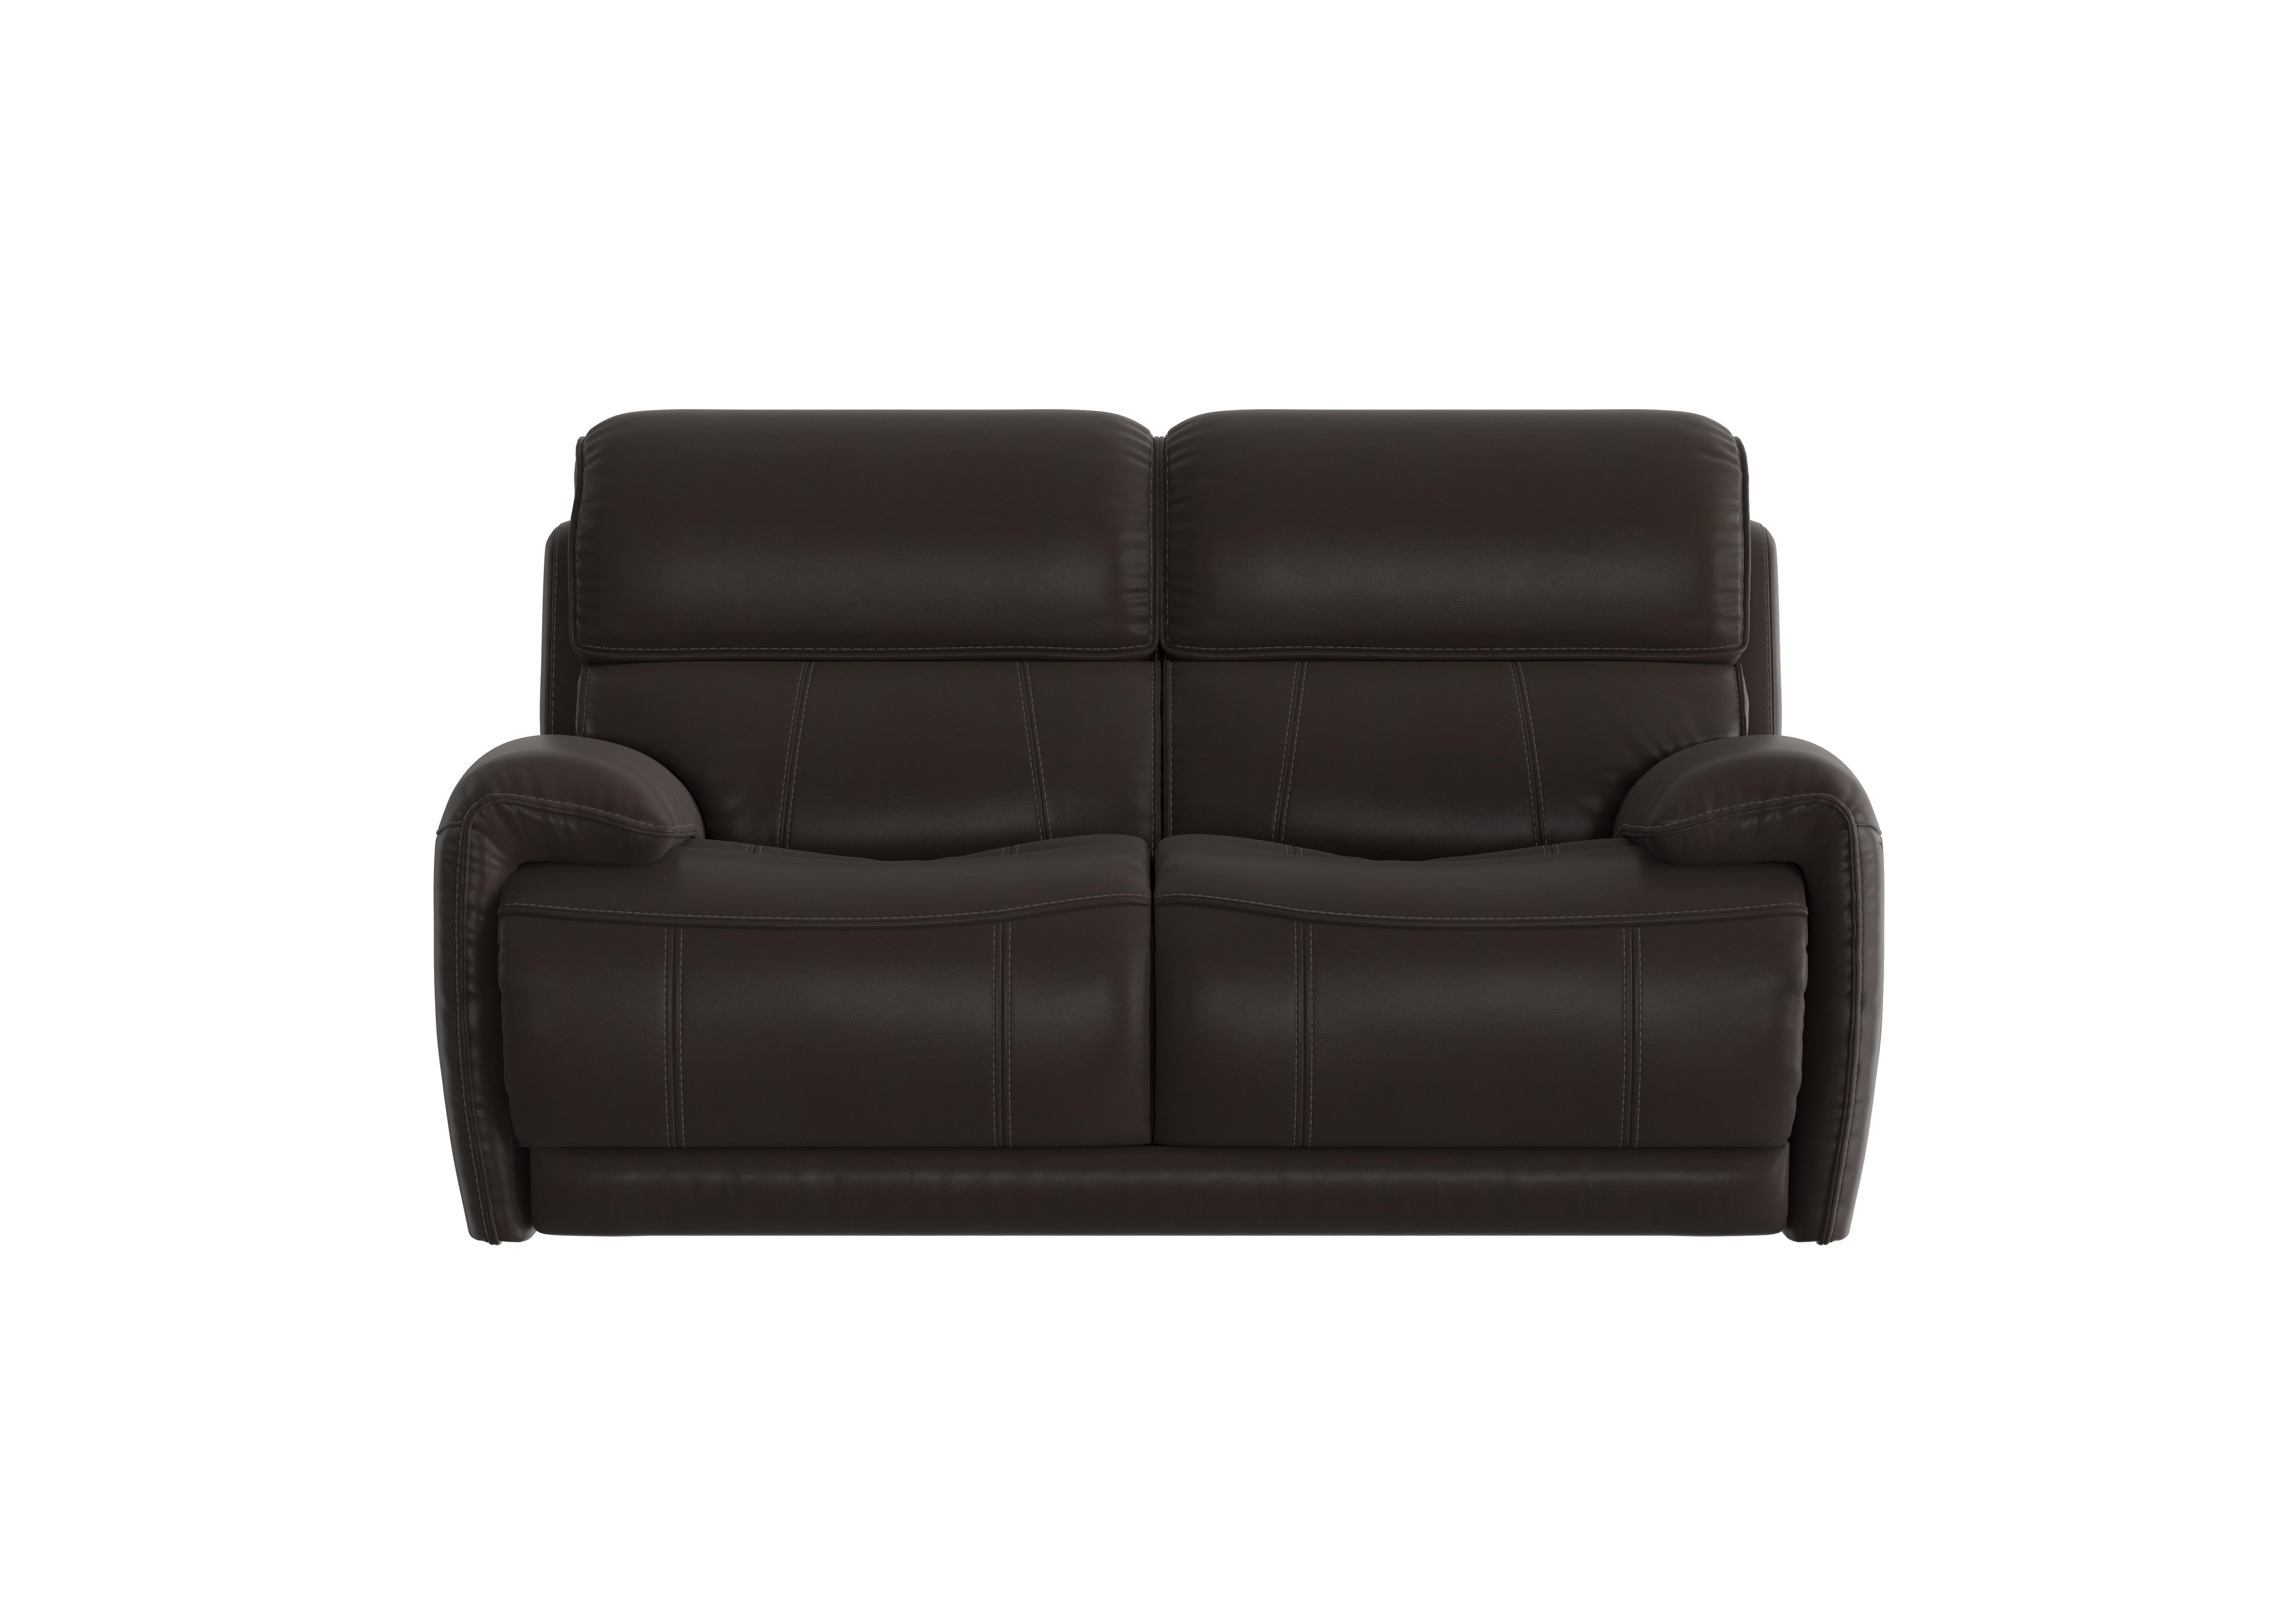 Link 2 Seater Leather Sofa in Bv-1748 Dark Chocolate on Furniture Village